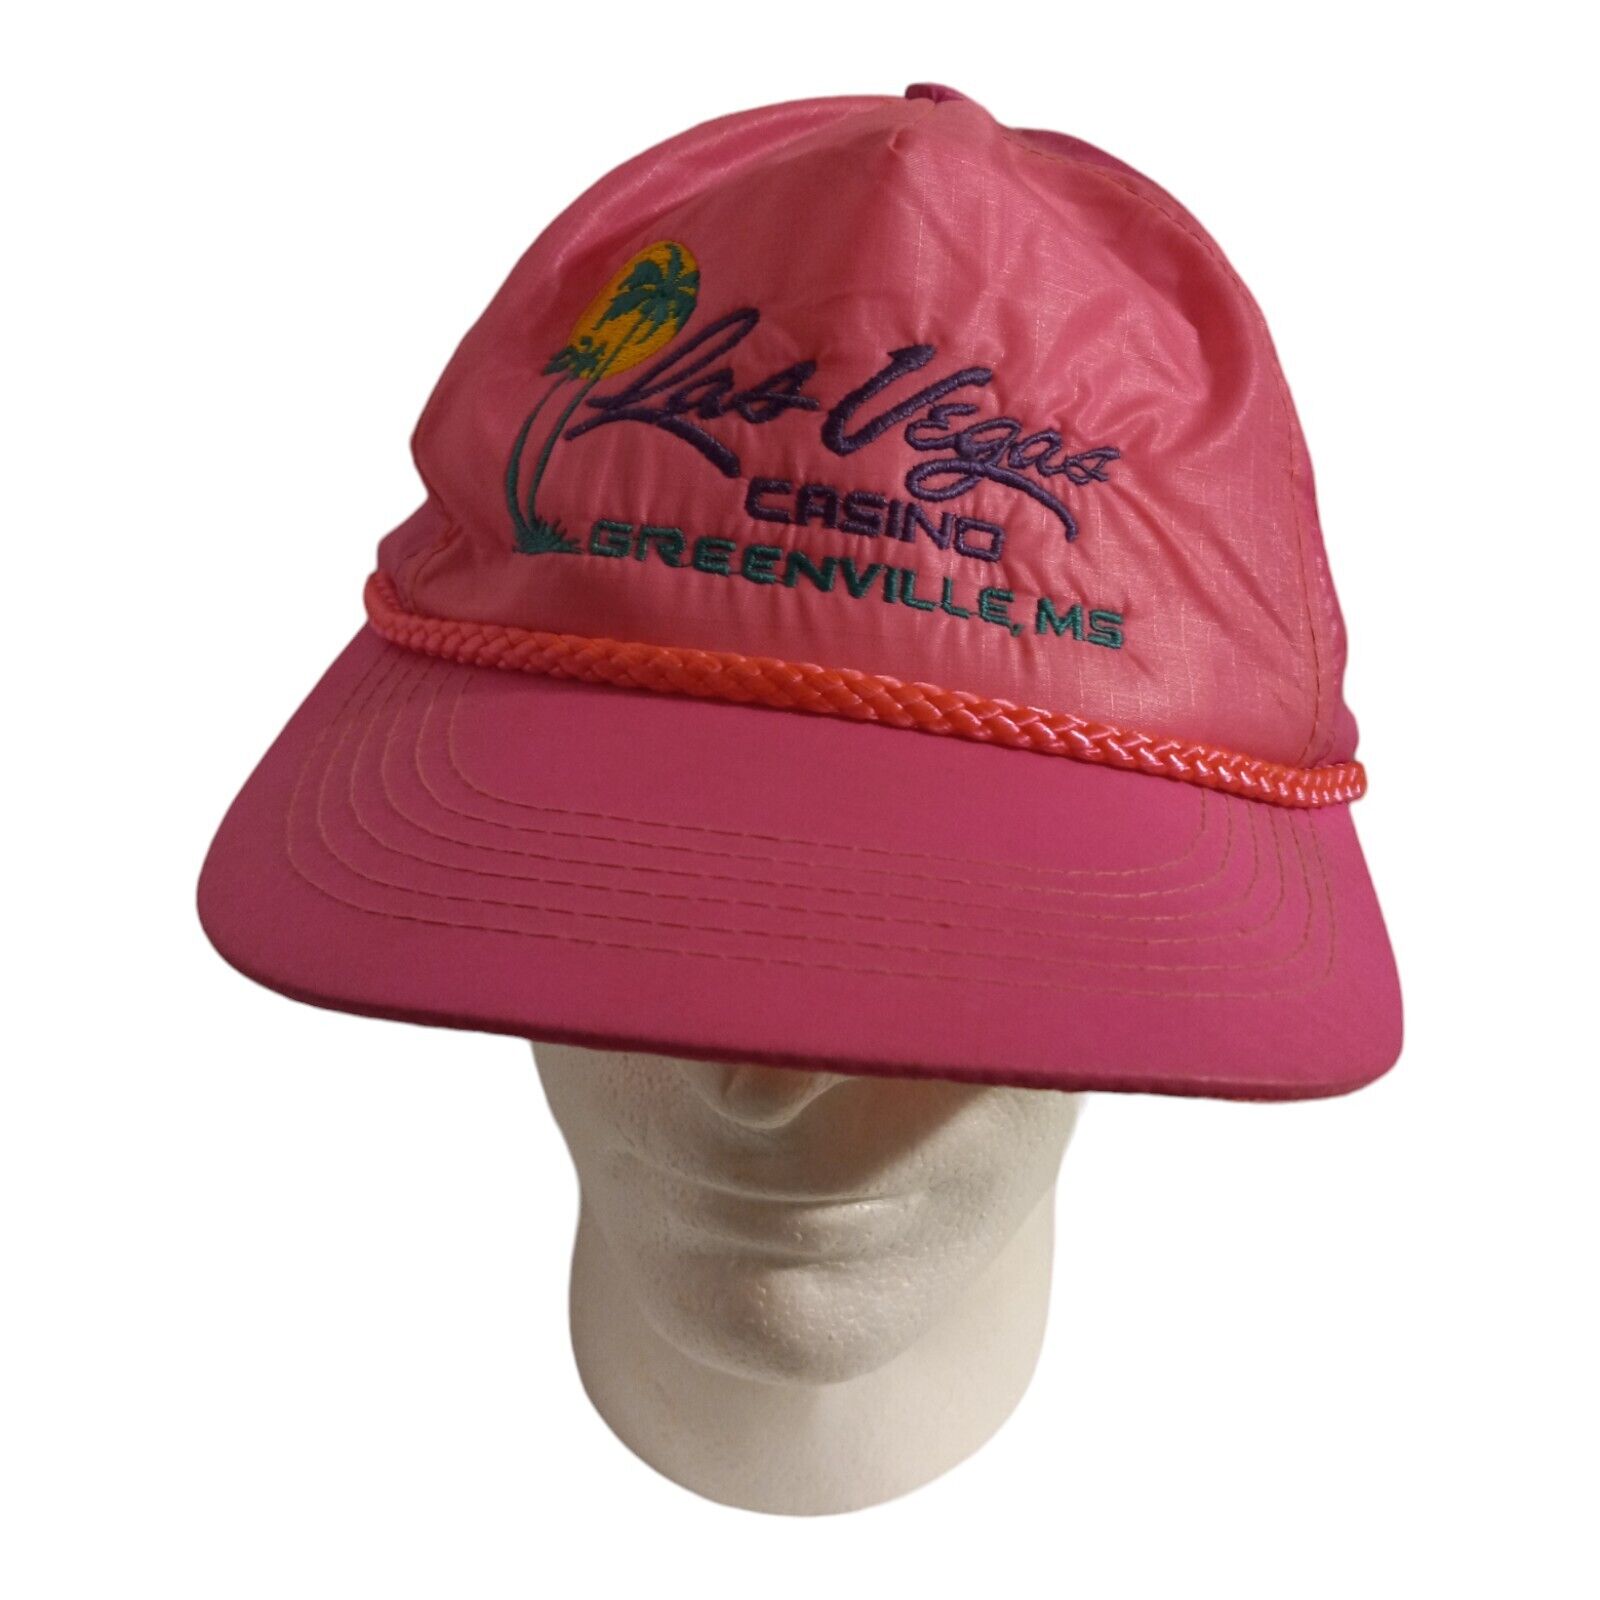 las vegas casino greenville Mississippi hat pink adjustable